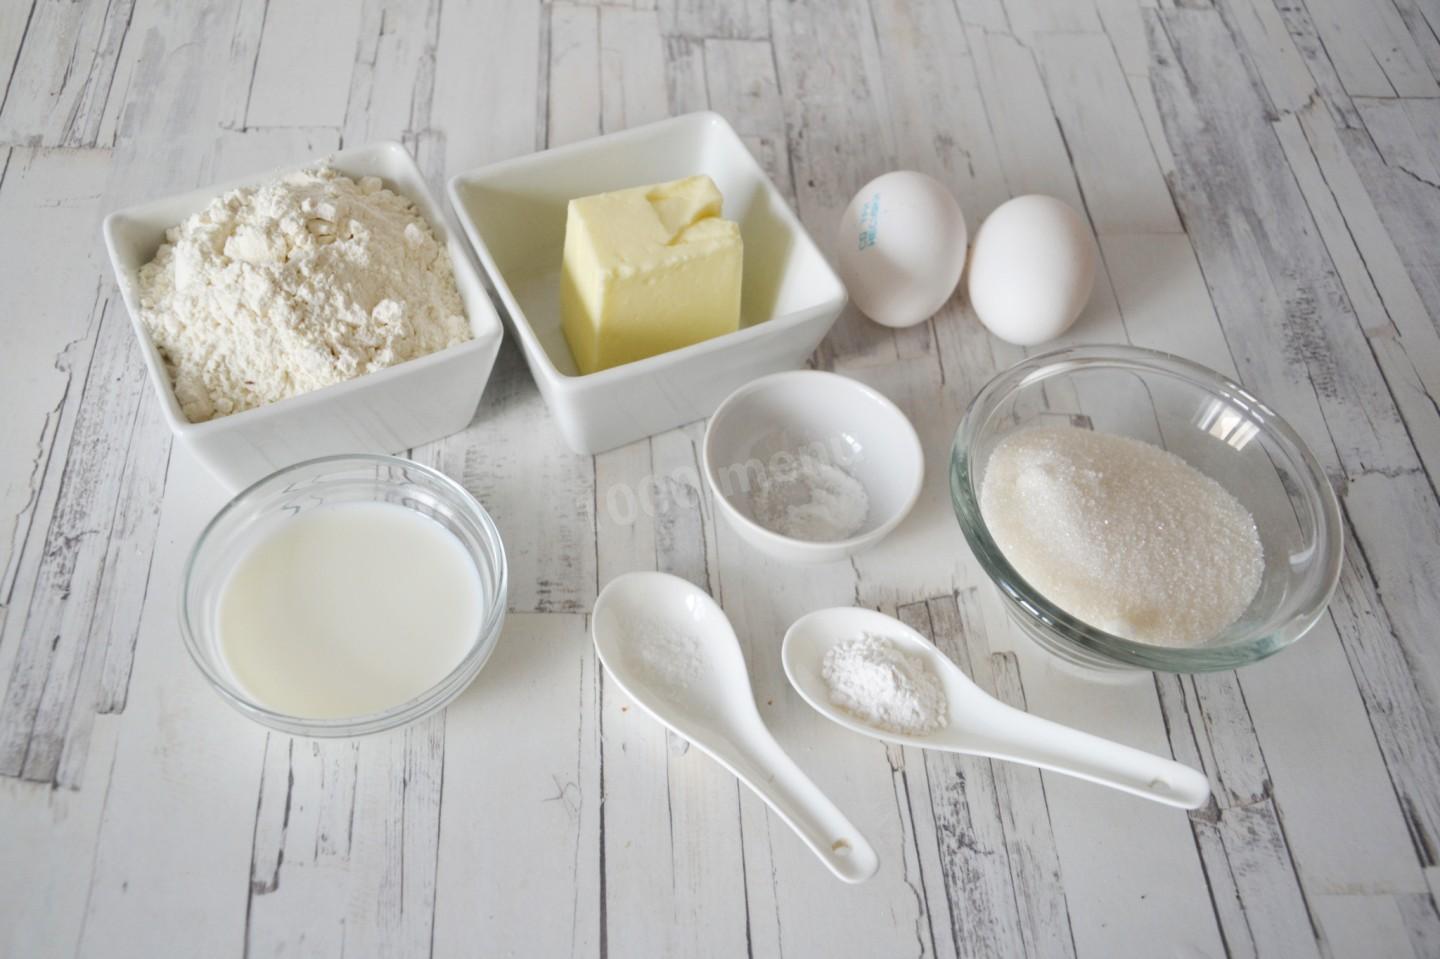 Яйцо масло сливочное сахар мука рецепт. Молоко мука. Мука молоко яйца сахар. Сахар, соль, сливочное масло. Пирог молоко яйца мука сахар масло.